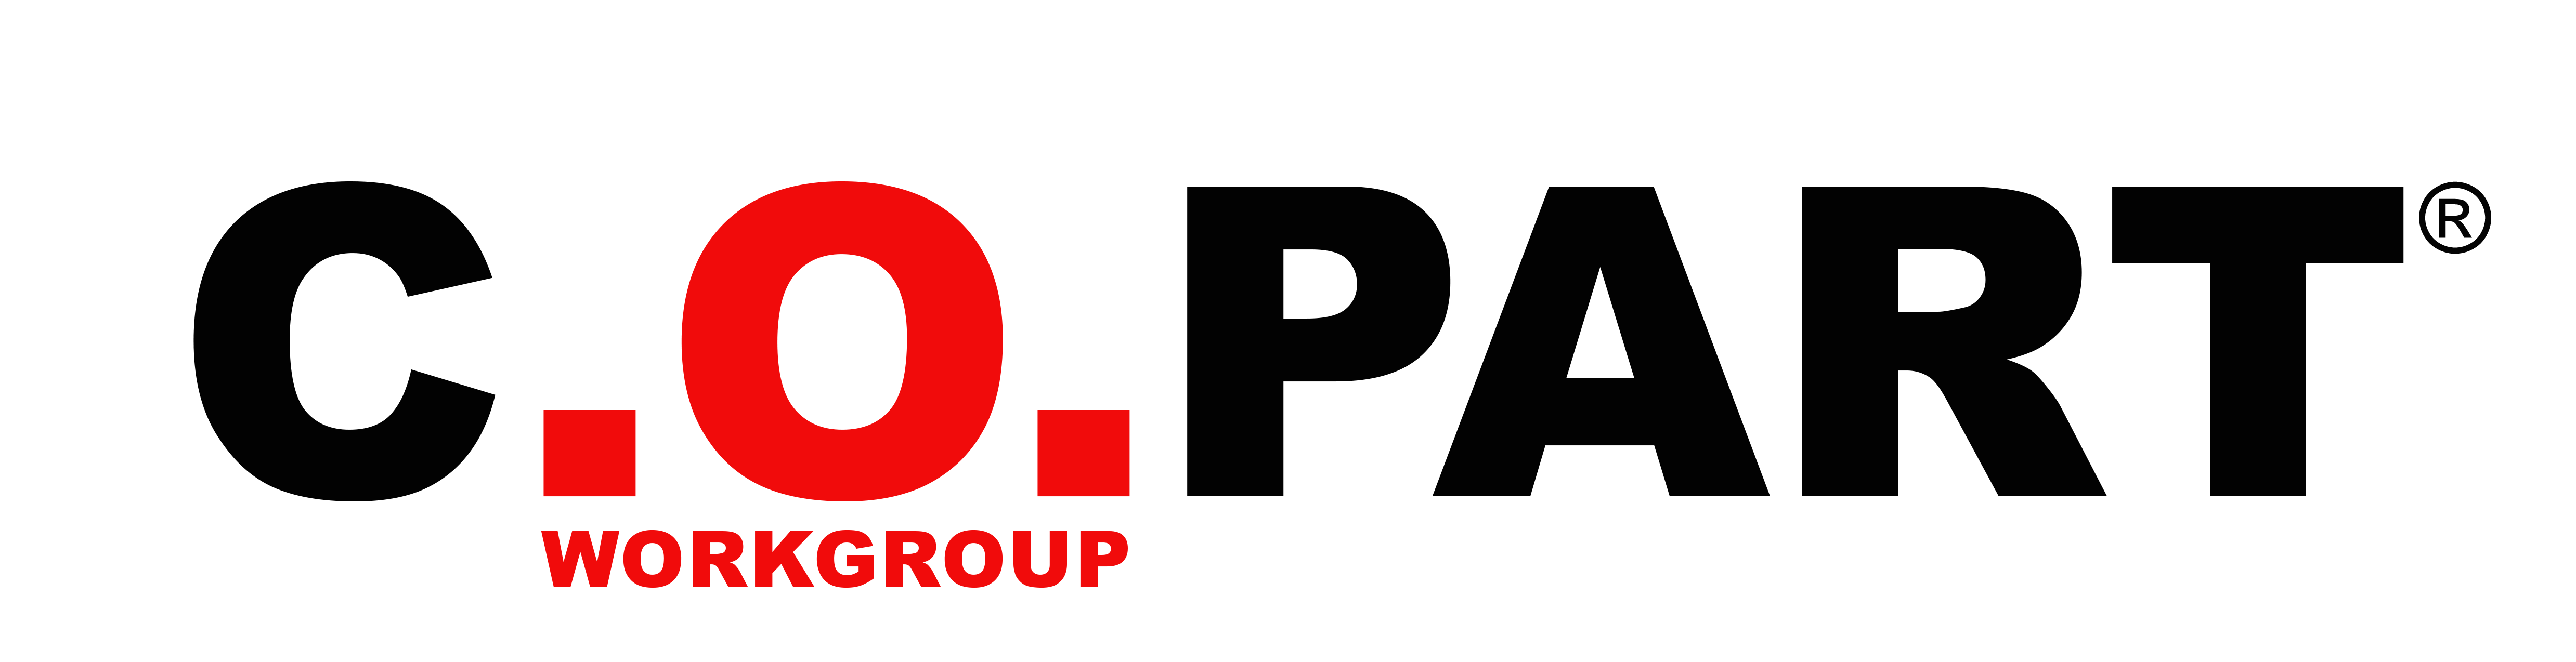 C.O.PART workgroup è un marchio registrato